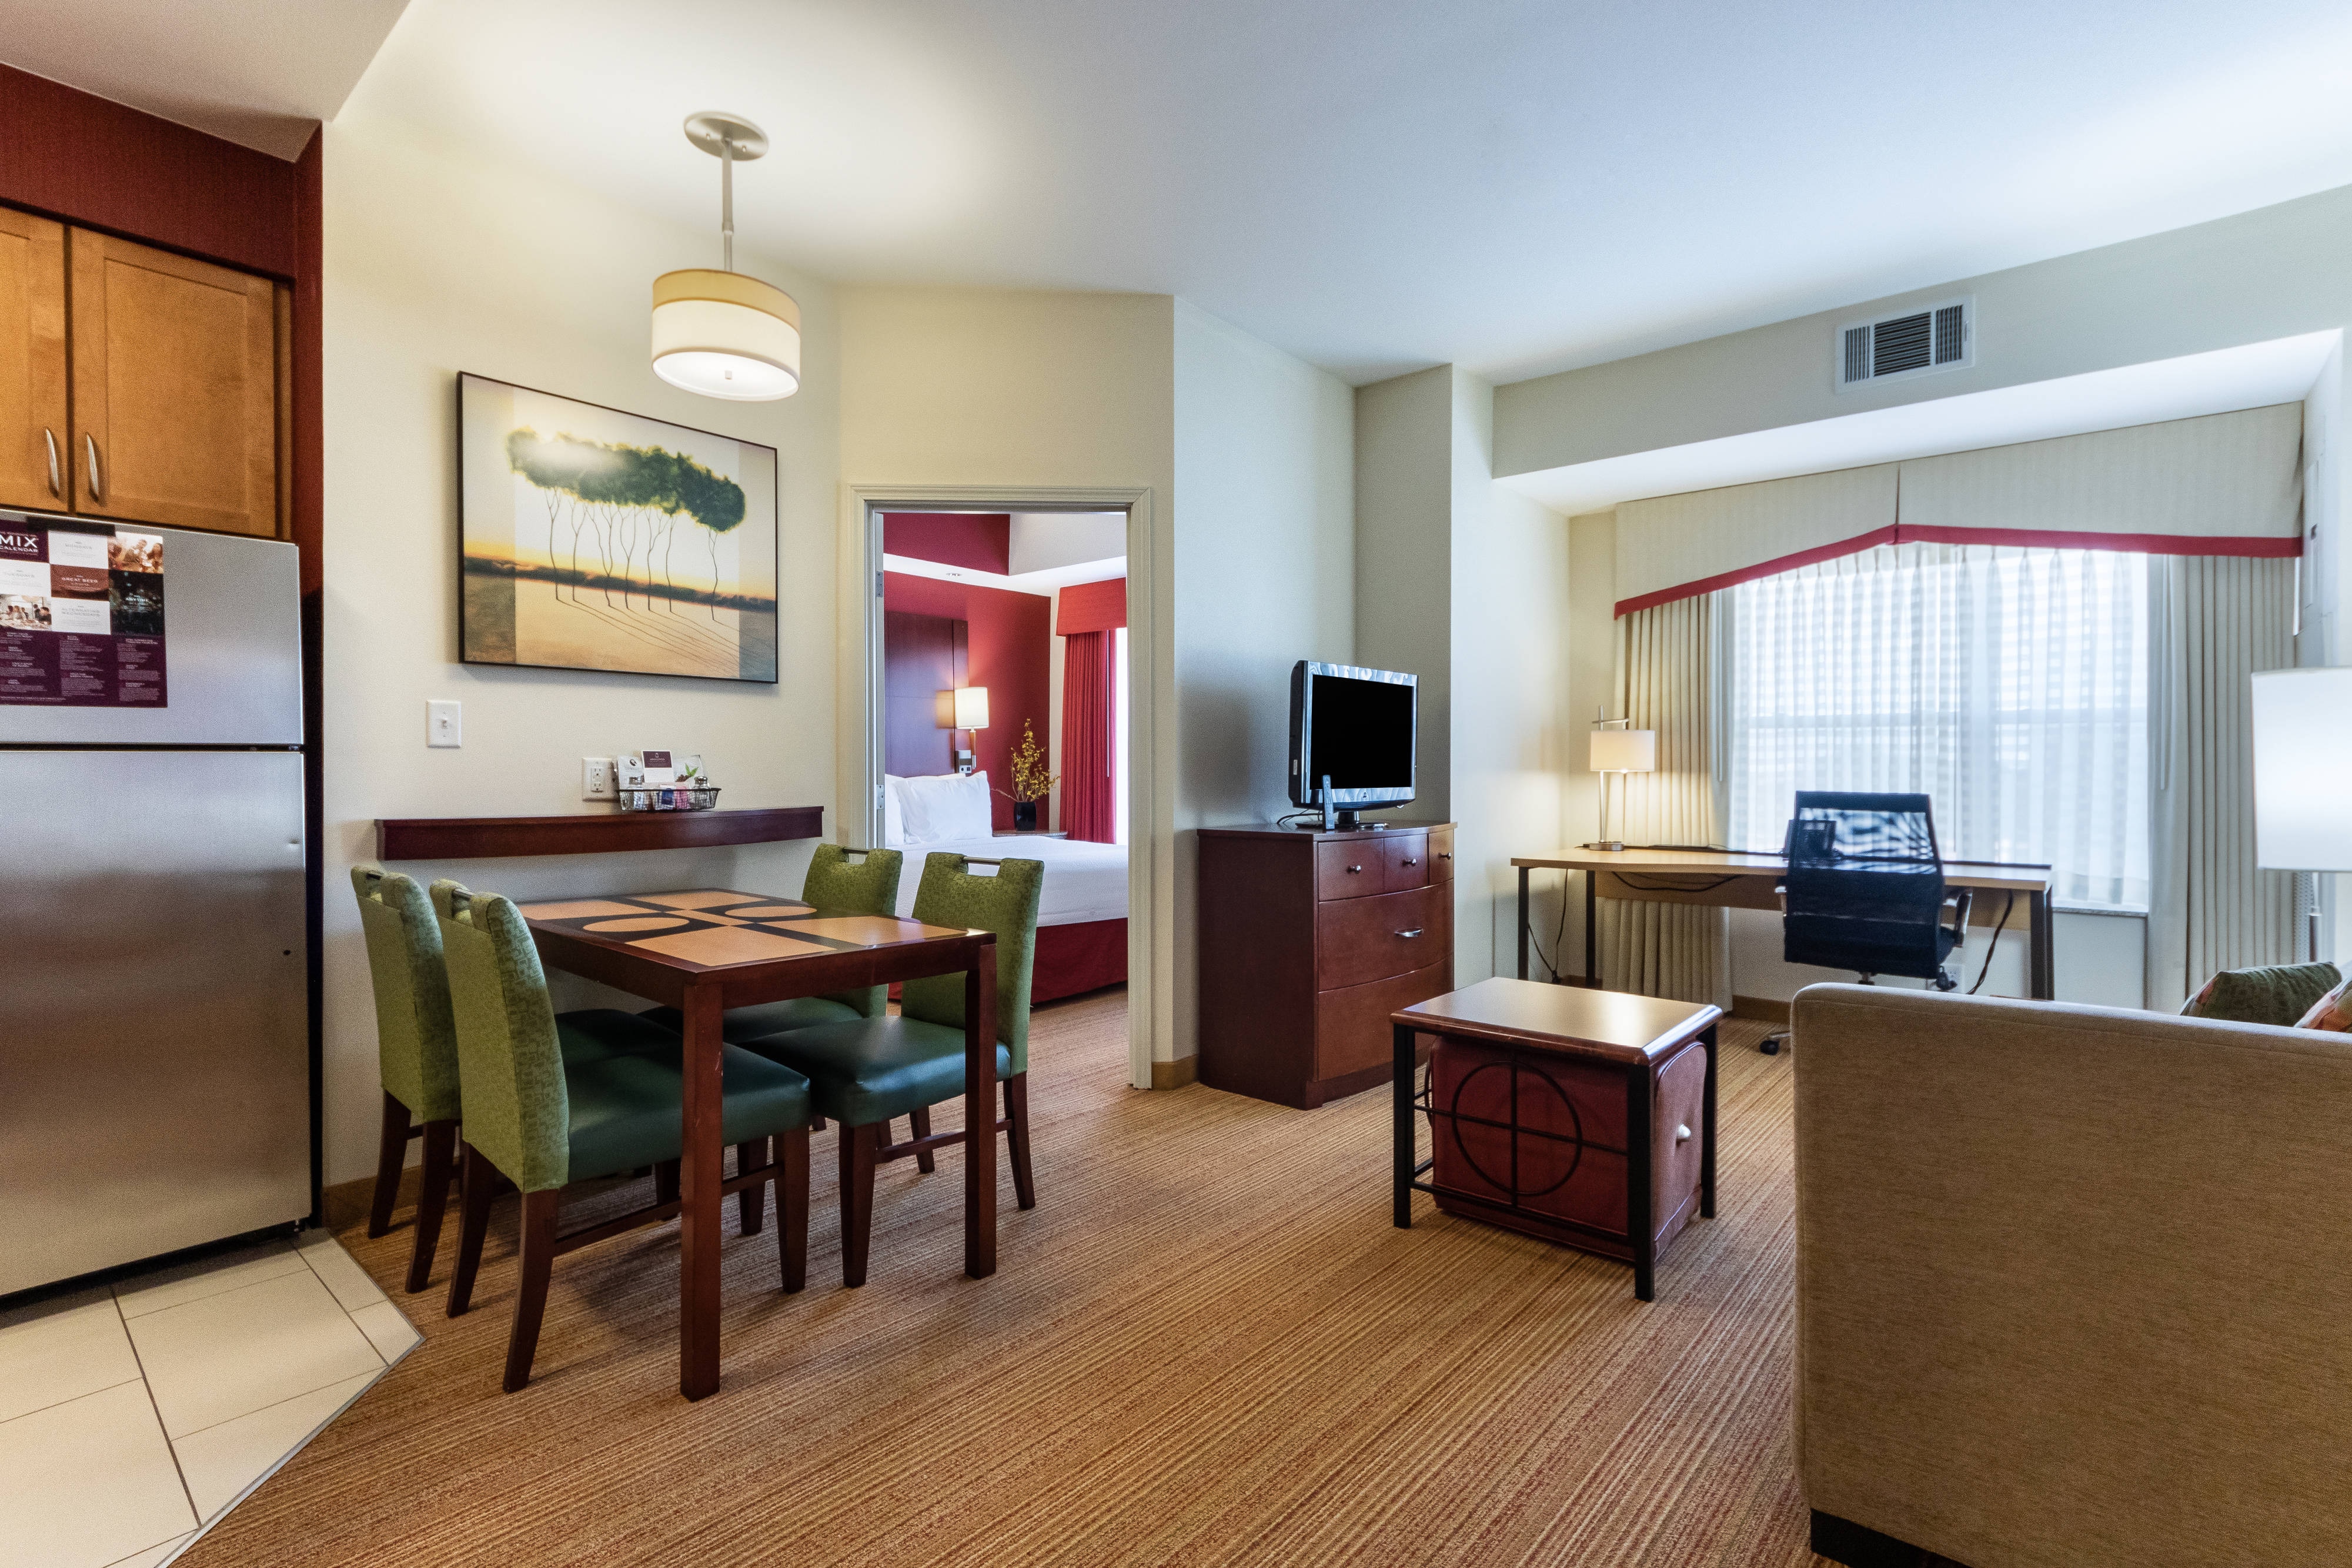 Extended-Stay Hotels in Irving, TX | Residence Inn Dallas ...